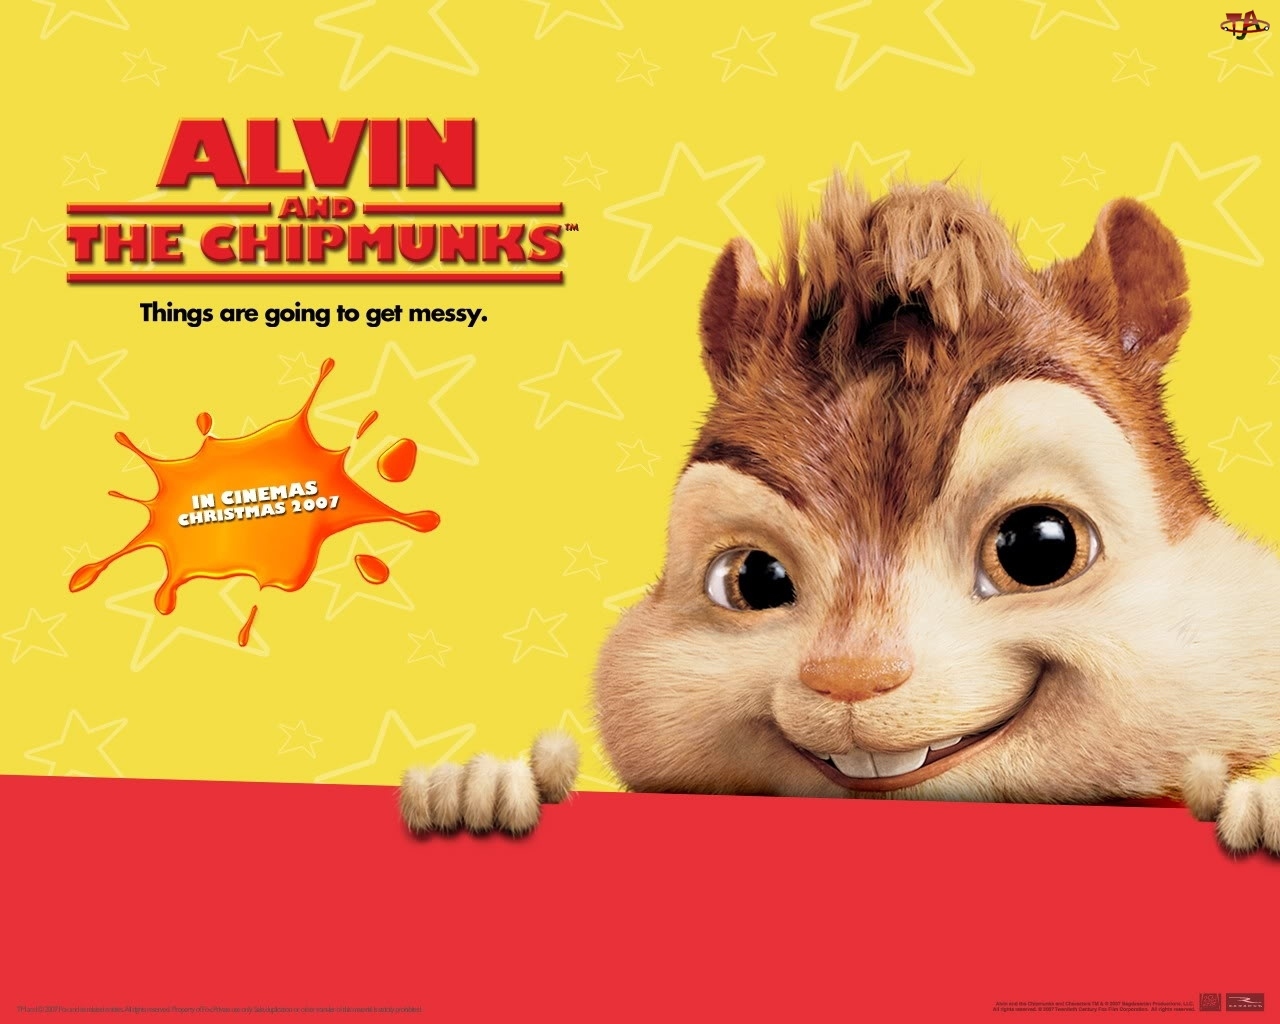 Wiewiórka, Alvin i wiewiórki, Alvin and the Chipmunks